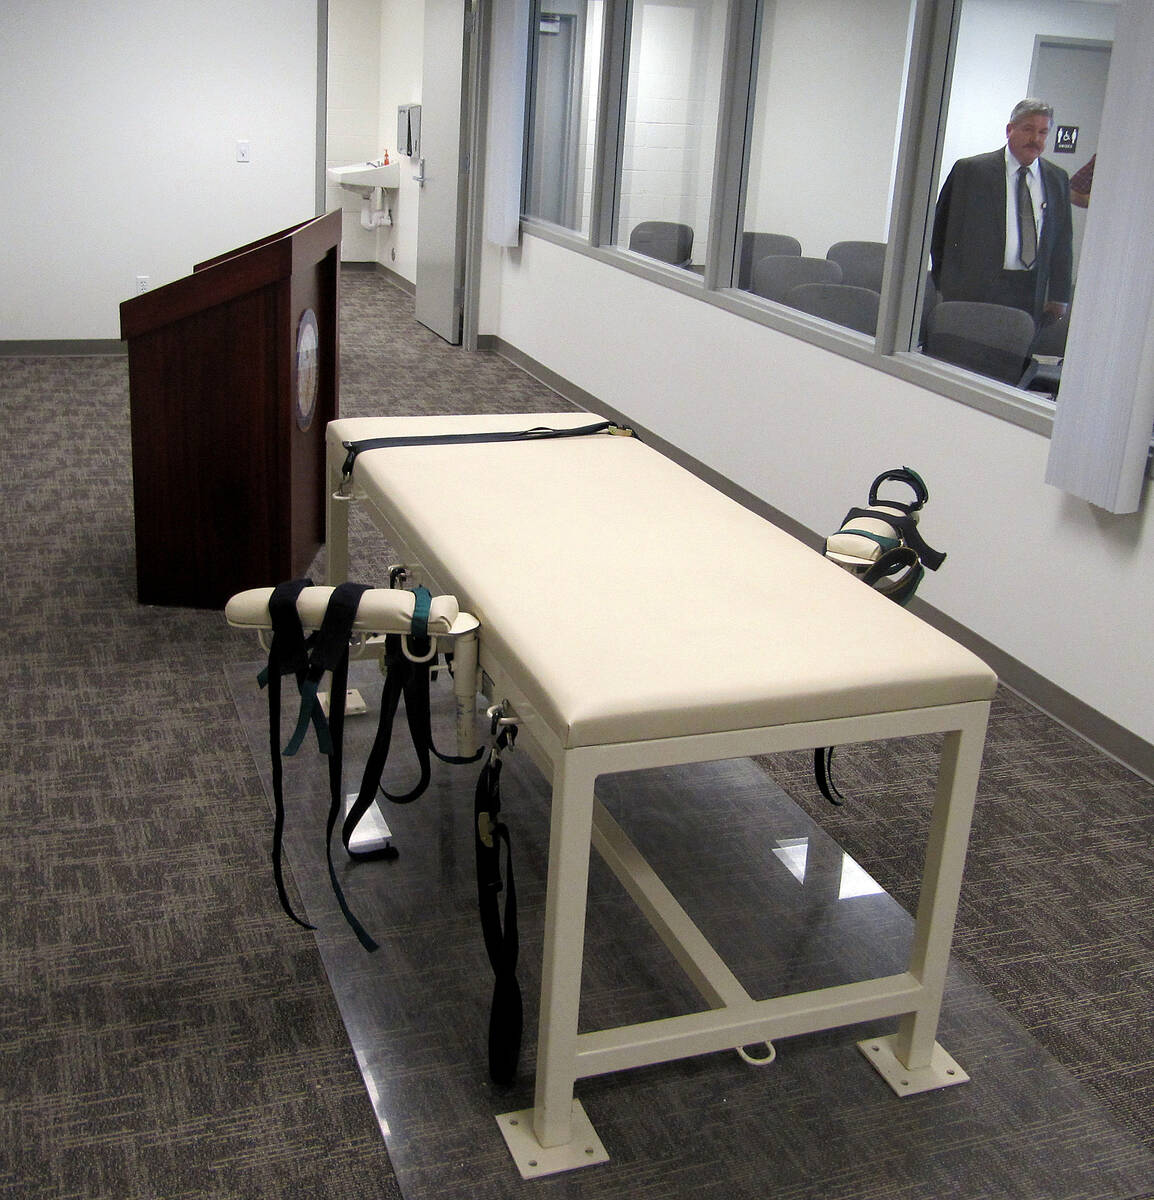 The execution chamber at the Idaho Maximum Security Institution is shown as Security Institutio ...